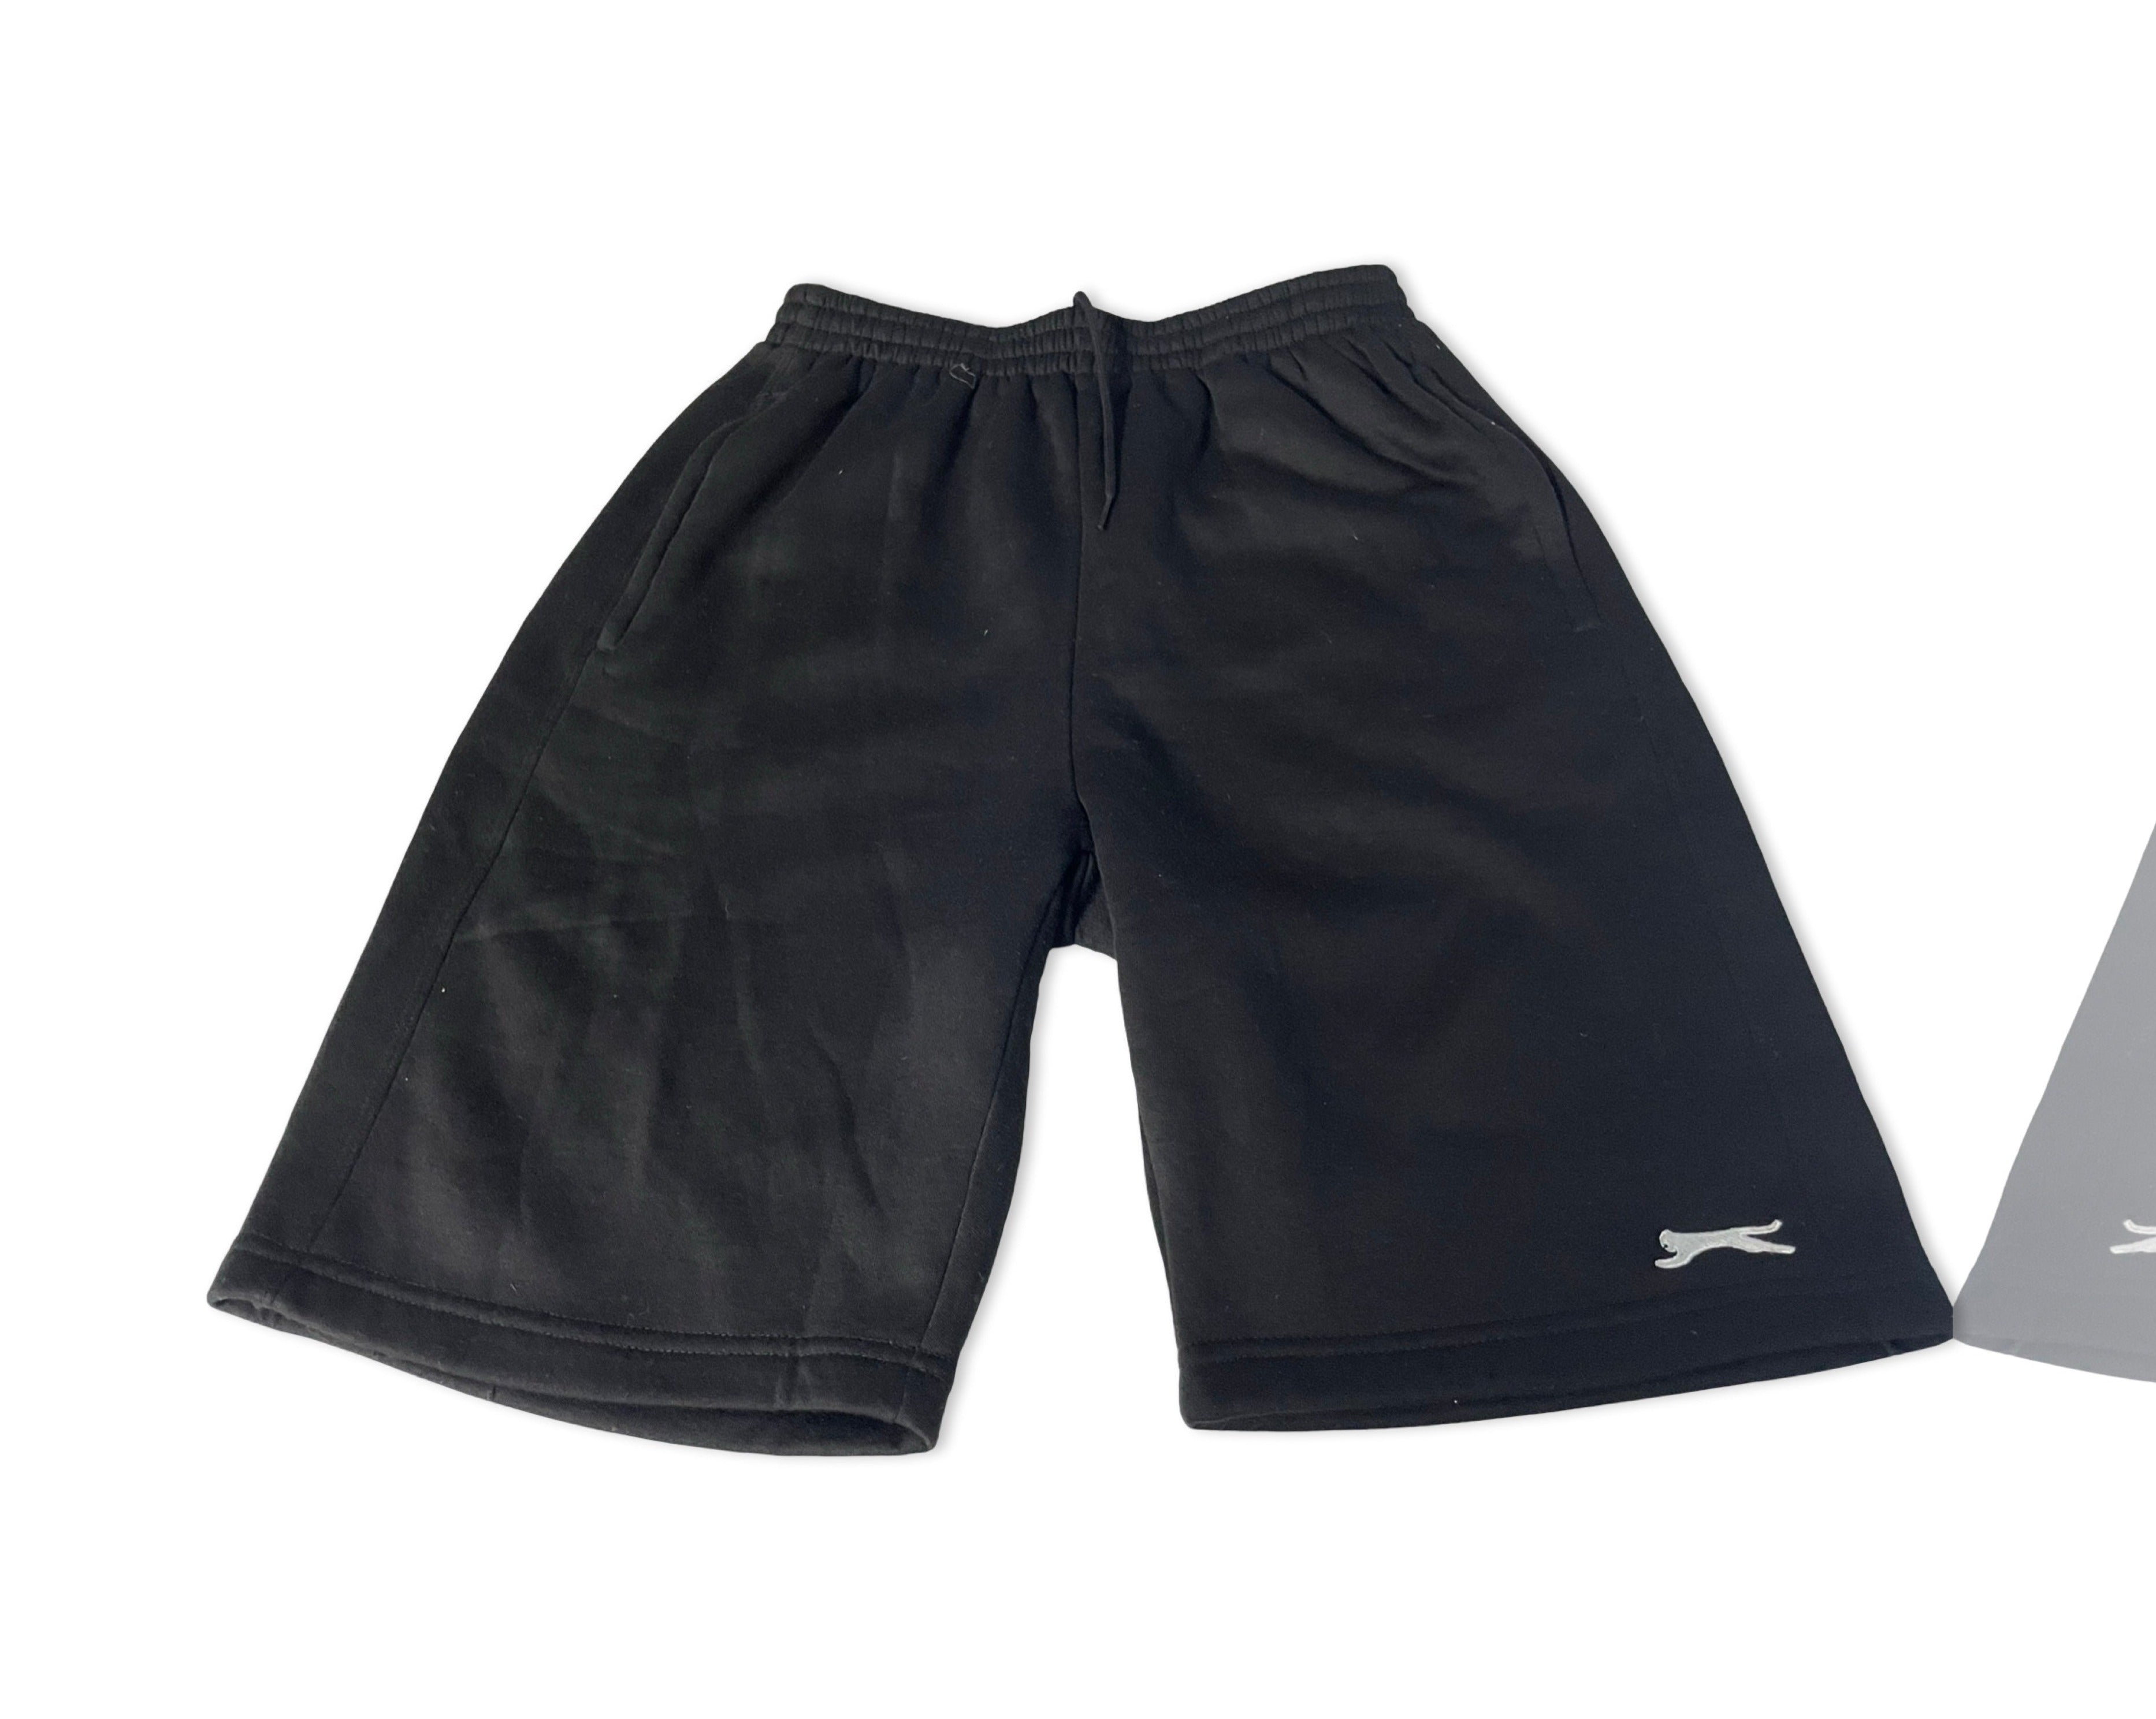 Vintage ✅ SLAZENGER Jersey Men's Shorts Shorts Black Fleece Athletic Pants Workout Pants in Small W28 L7|SKU 4236